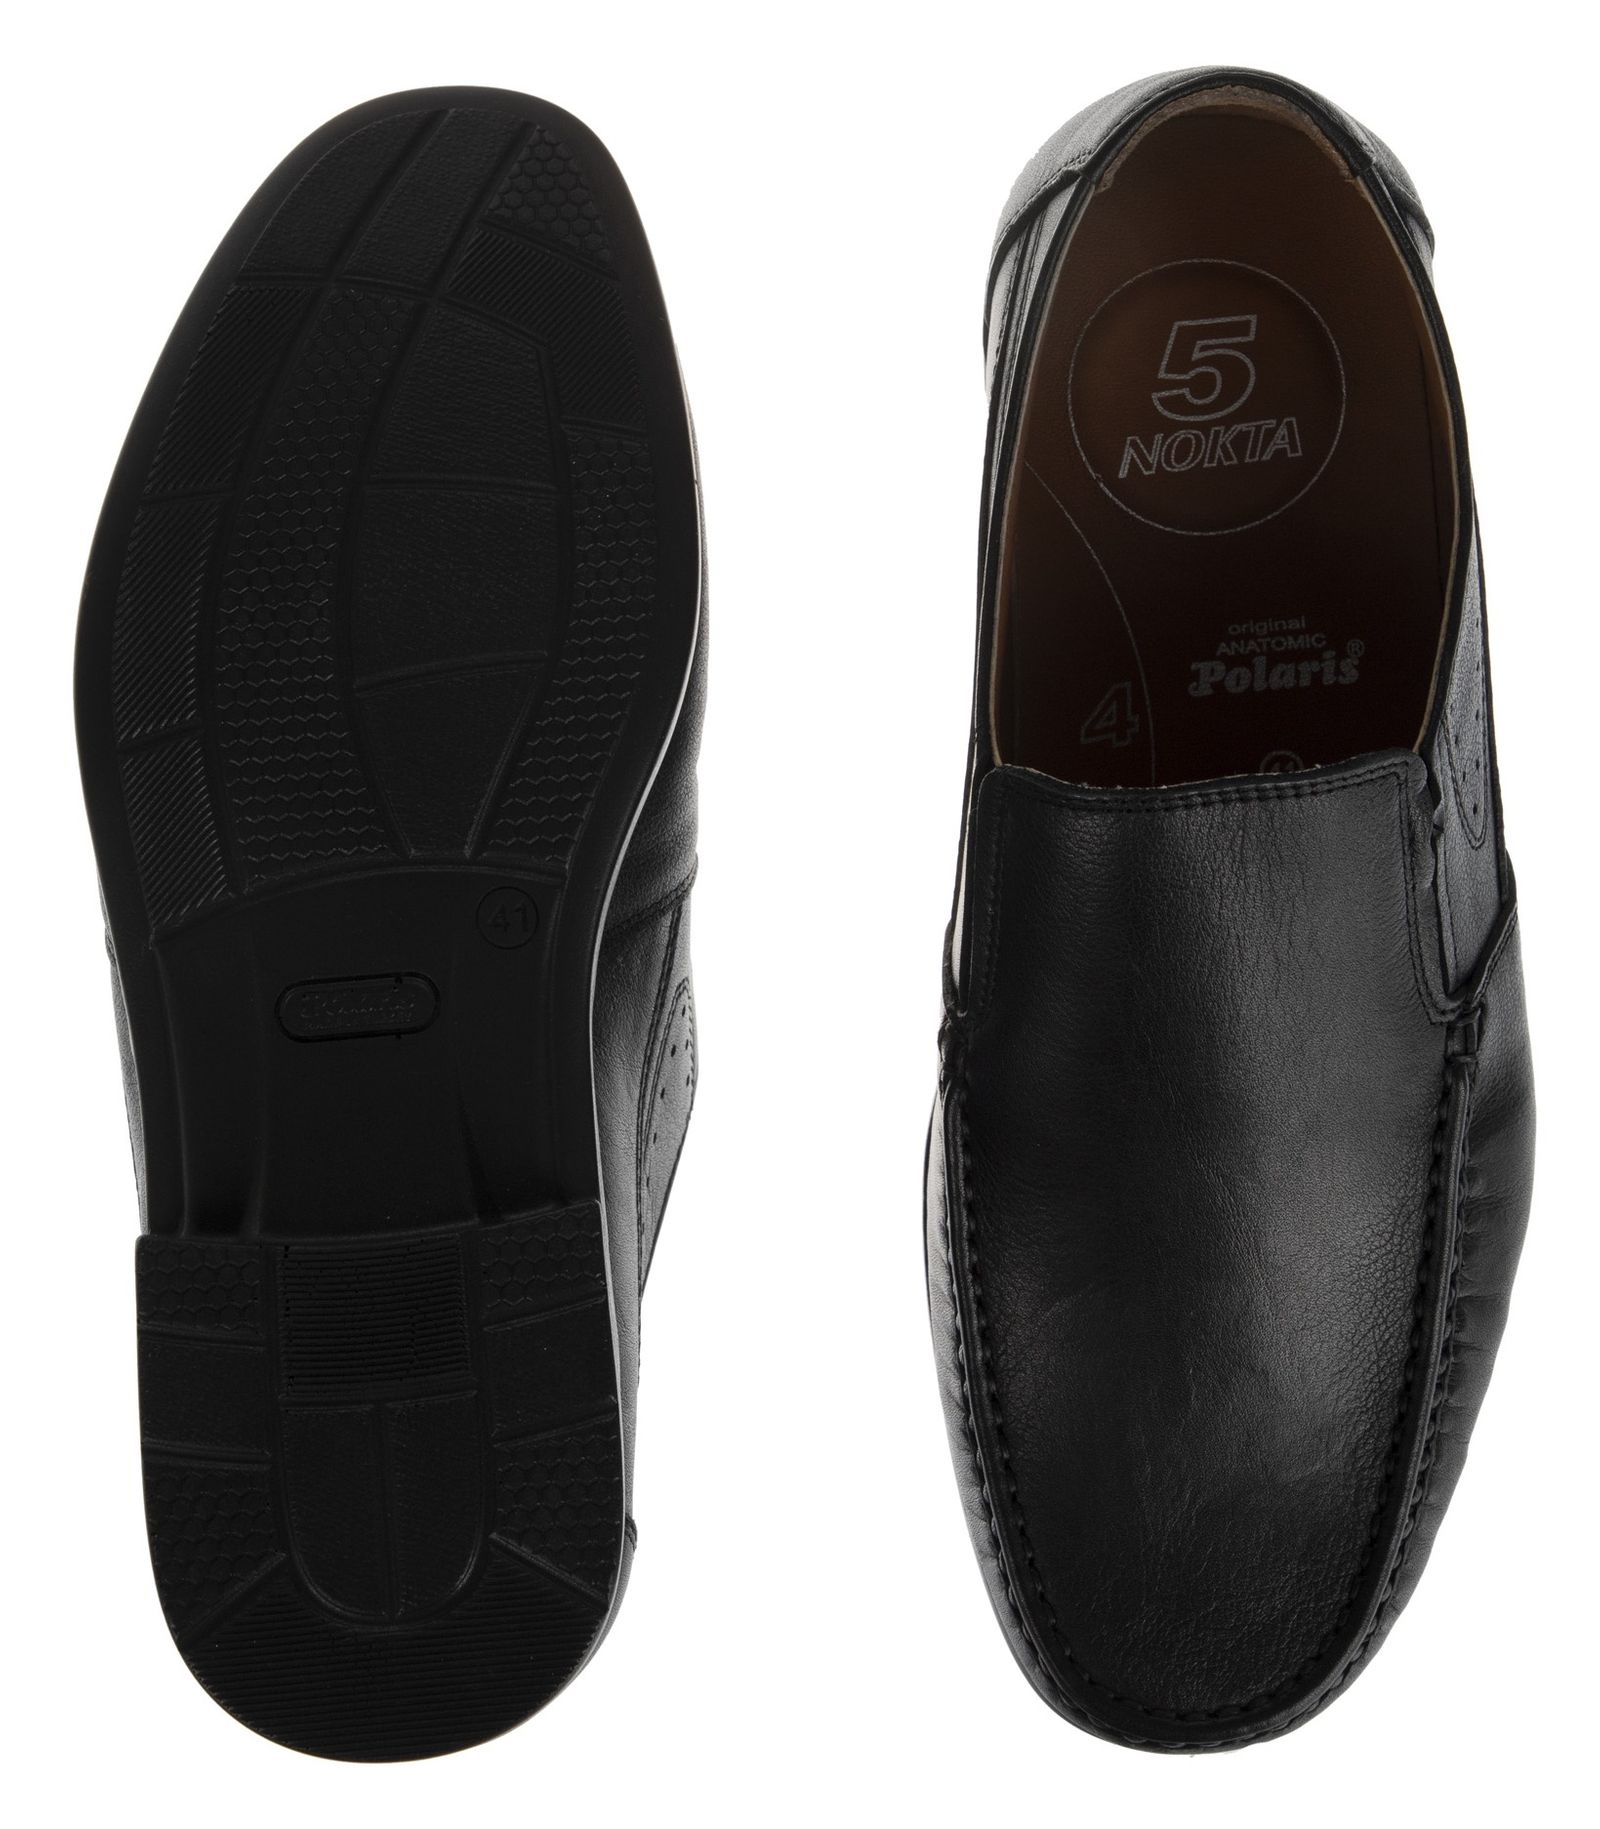 کفش روزمره مردانه پولاریس مدل 100294636-101 - مشکی - 6